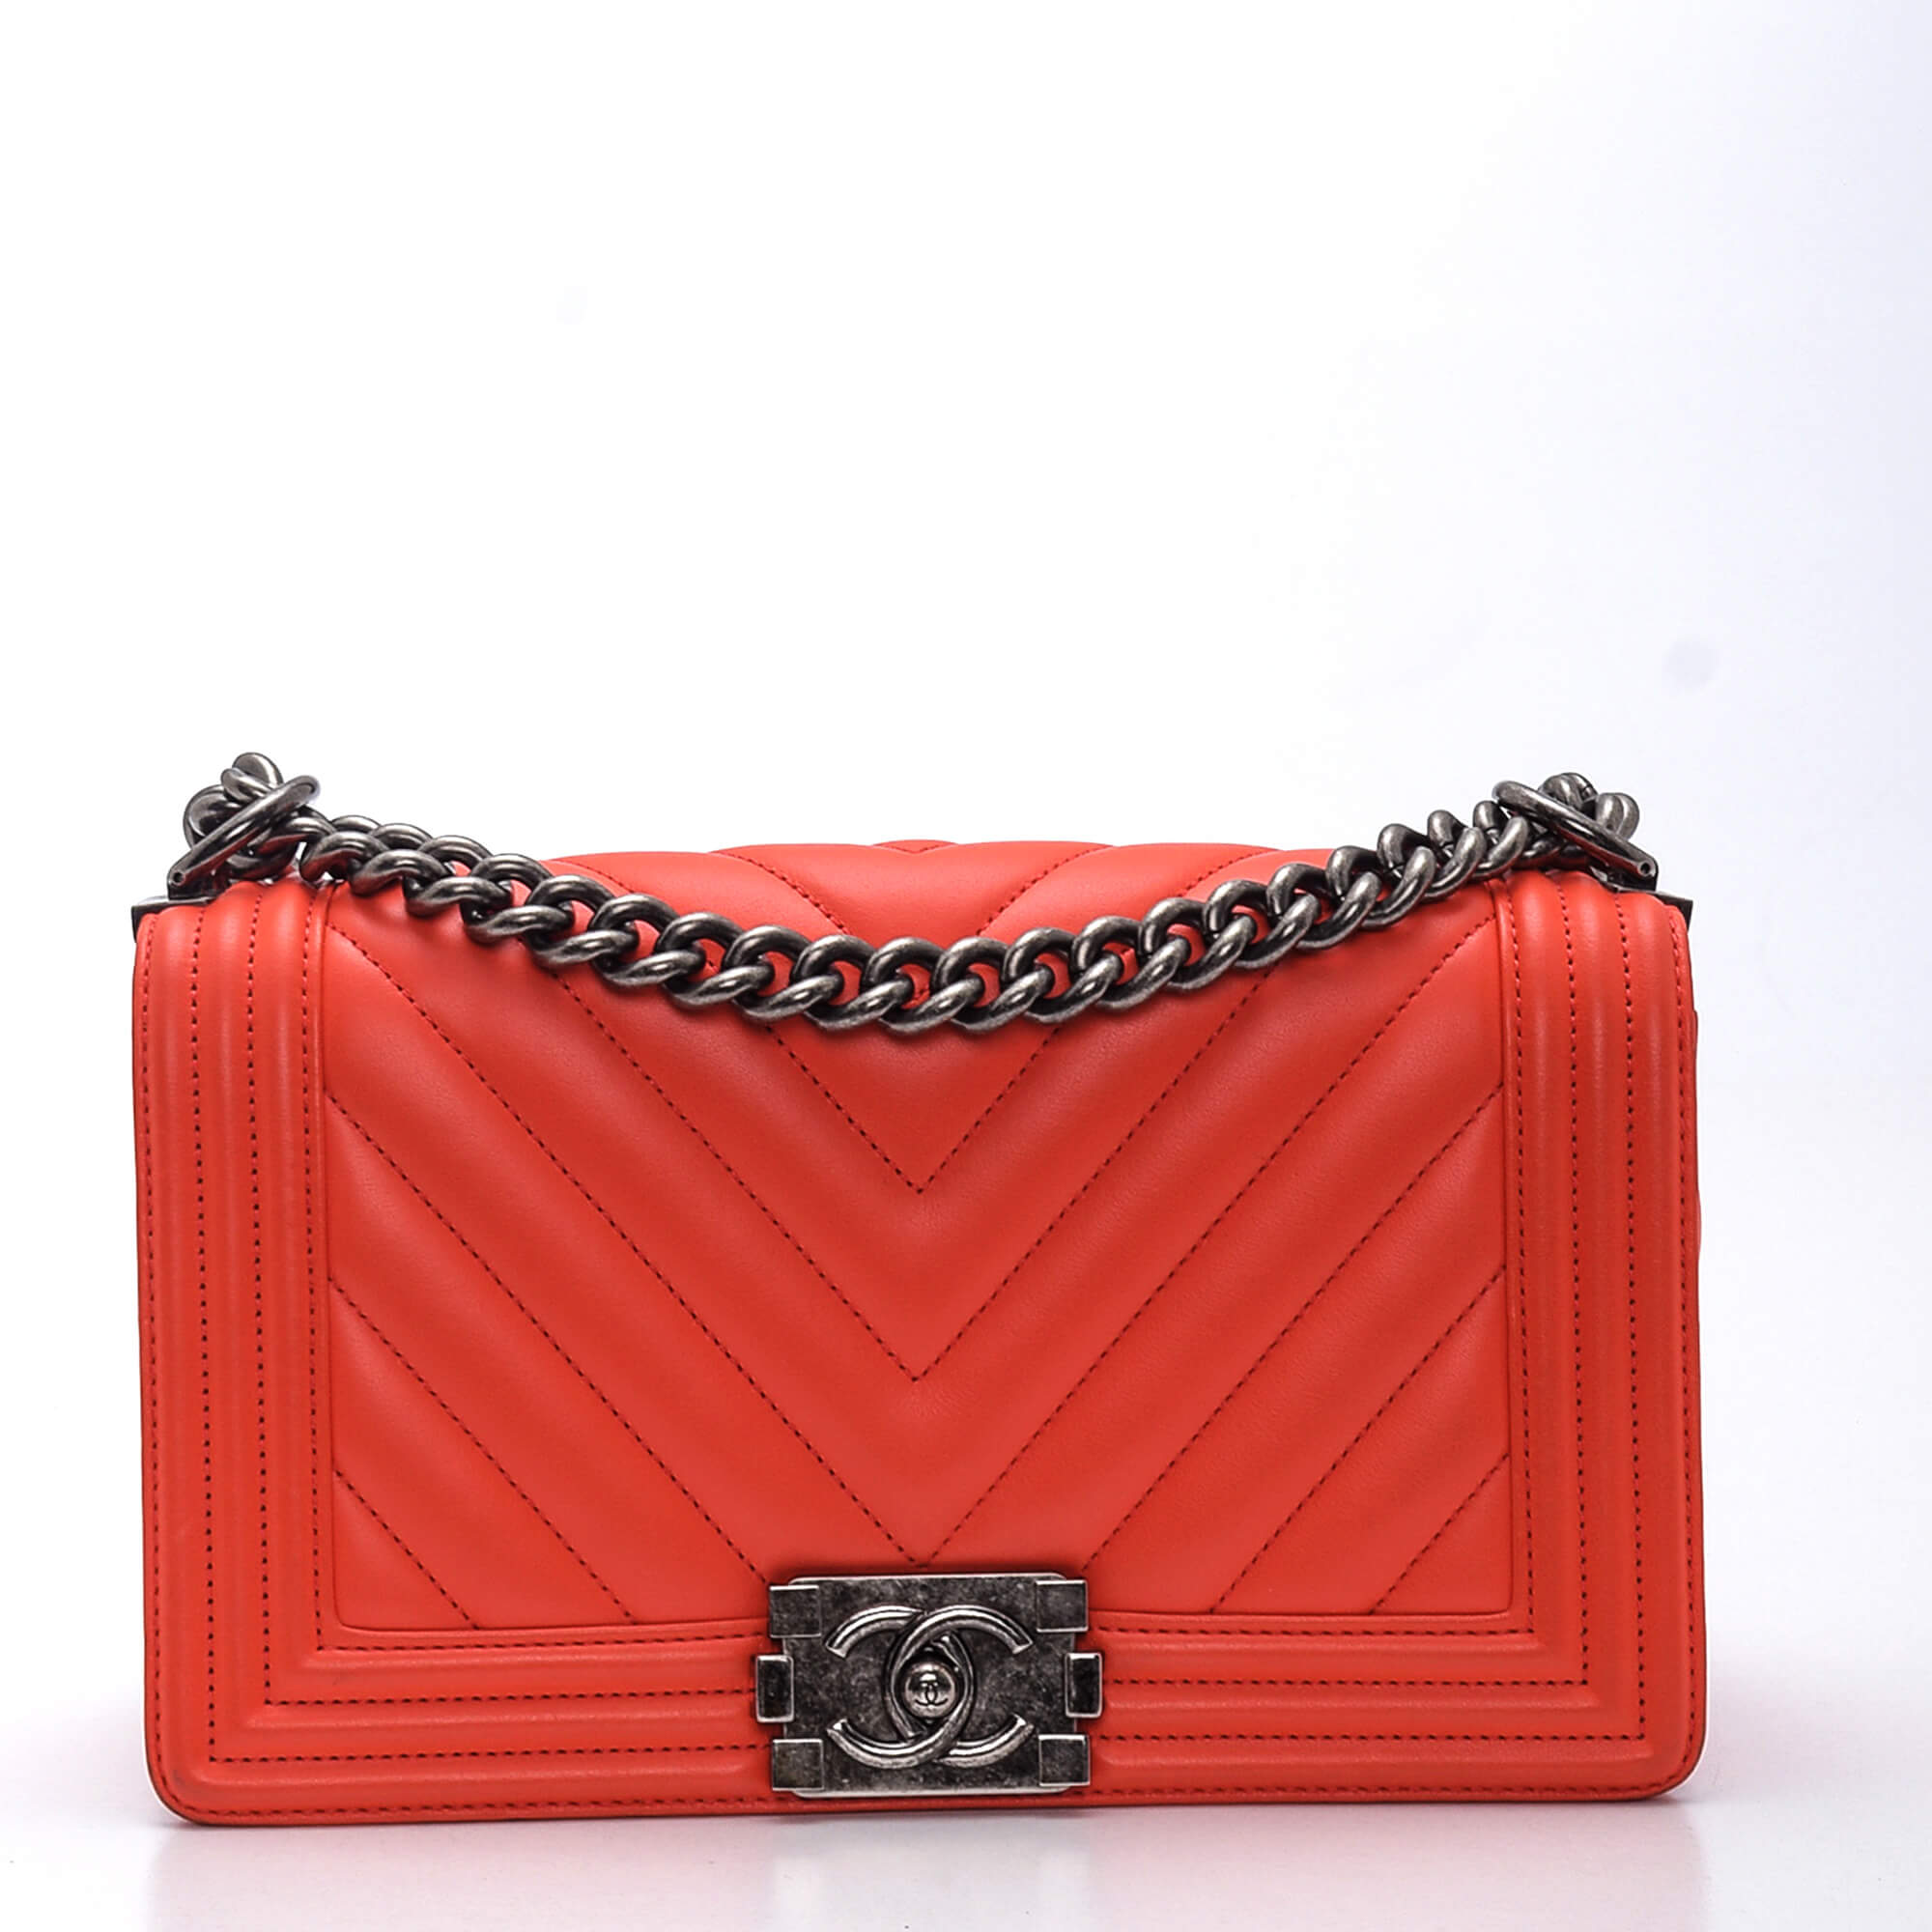 Chanel - Coral Chevron Lambskin Leather Medium Boy Bag 